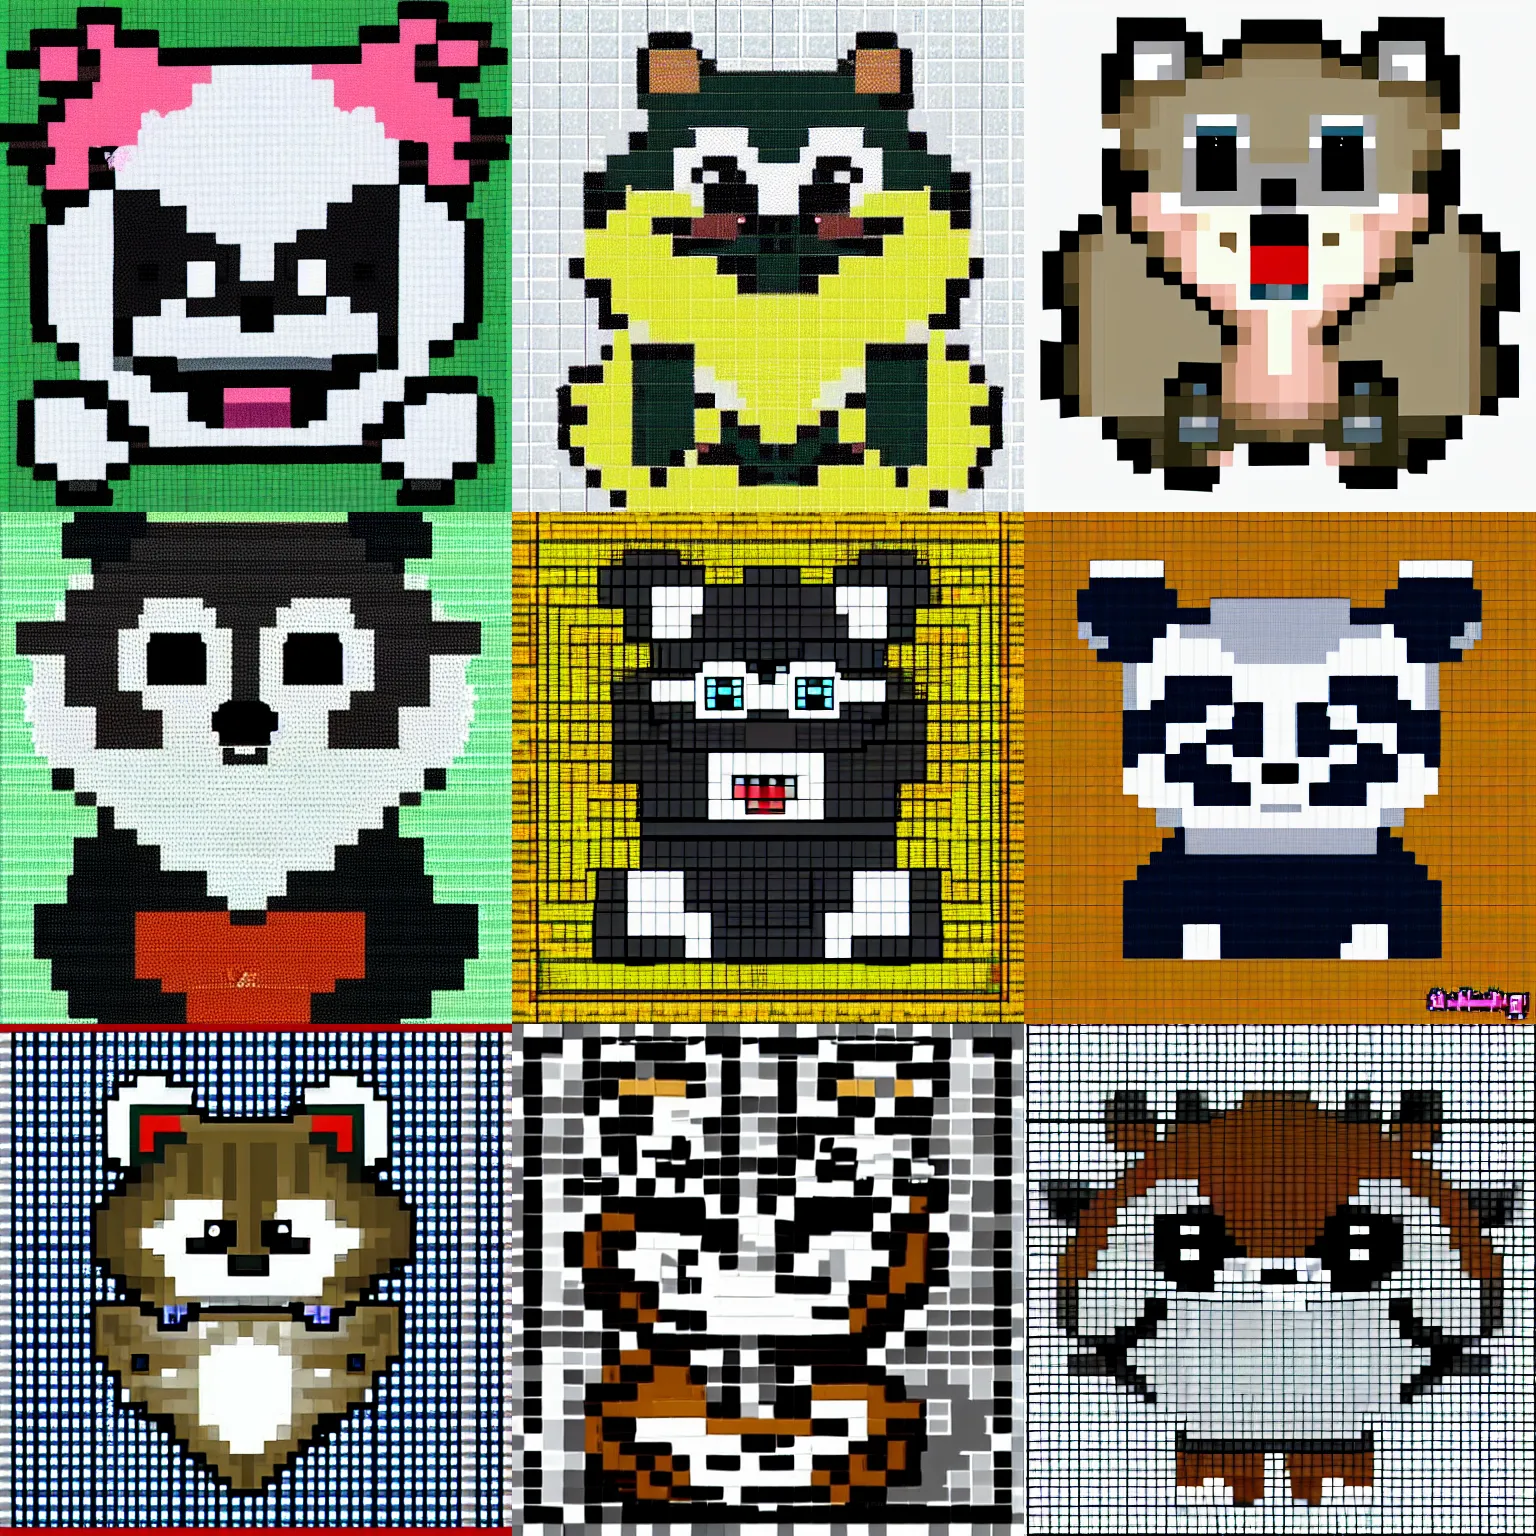 Prompt: a pixel art of a cute raccoon smiling